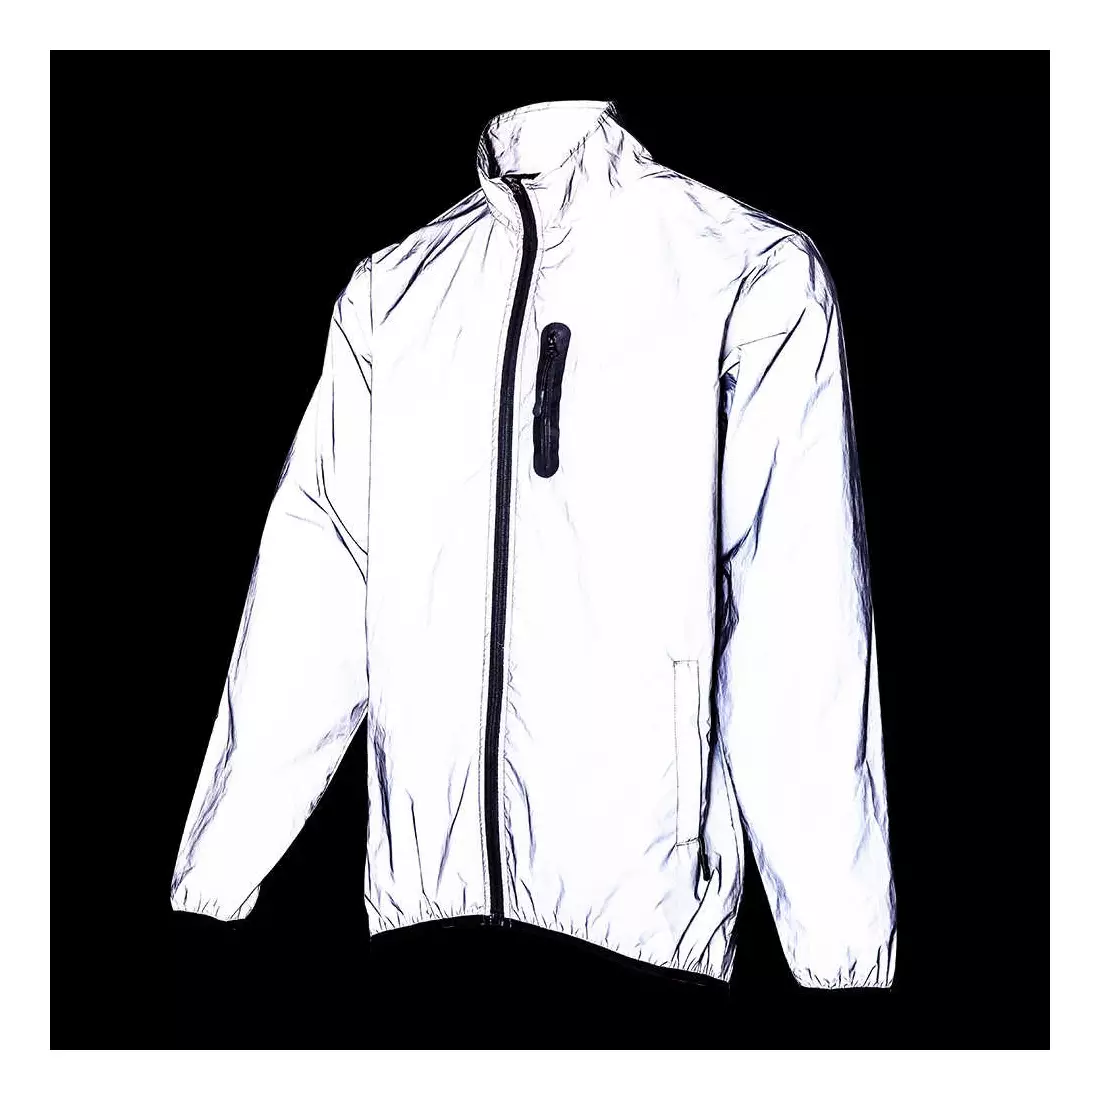 WOSAWE BL220 men's reflective cycling wind jacket